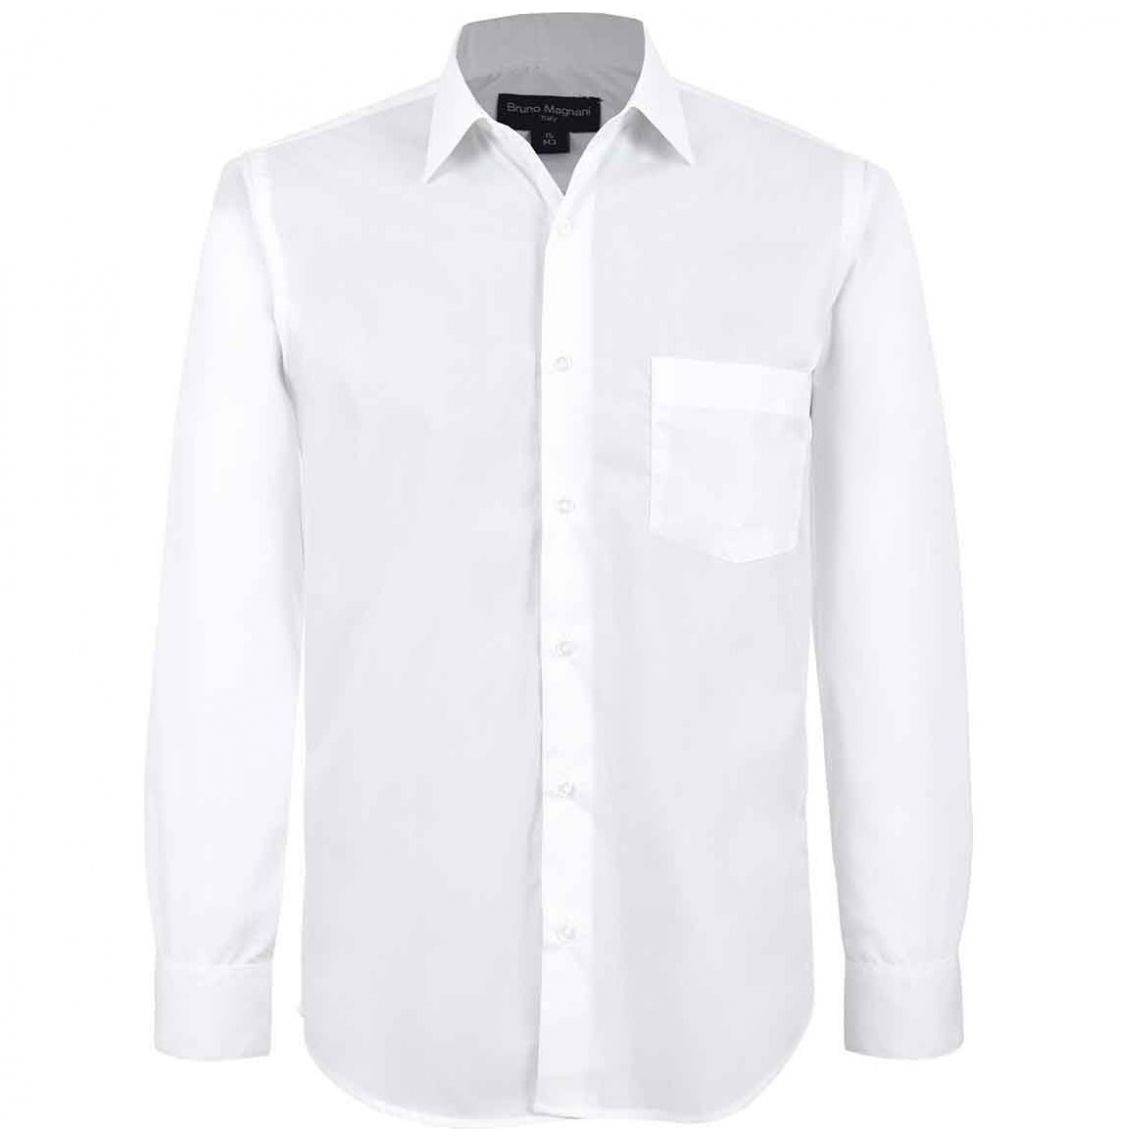 Camisa de Vestir Regular Bruno Magnani Color Blanco para Hombre Modelo Elo Bm85001Bl